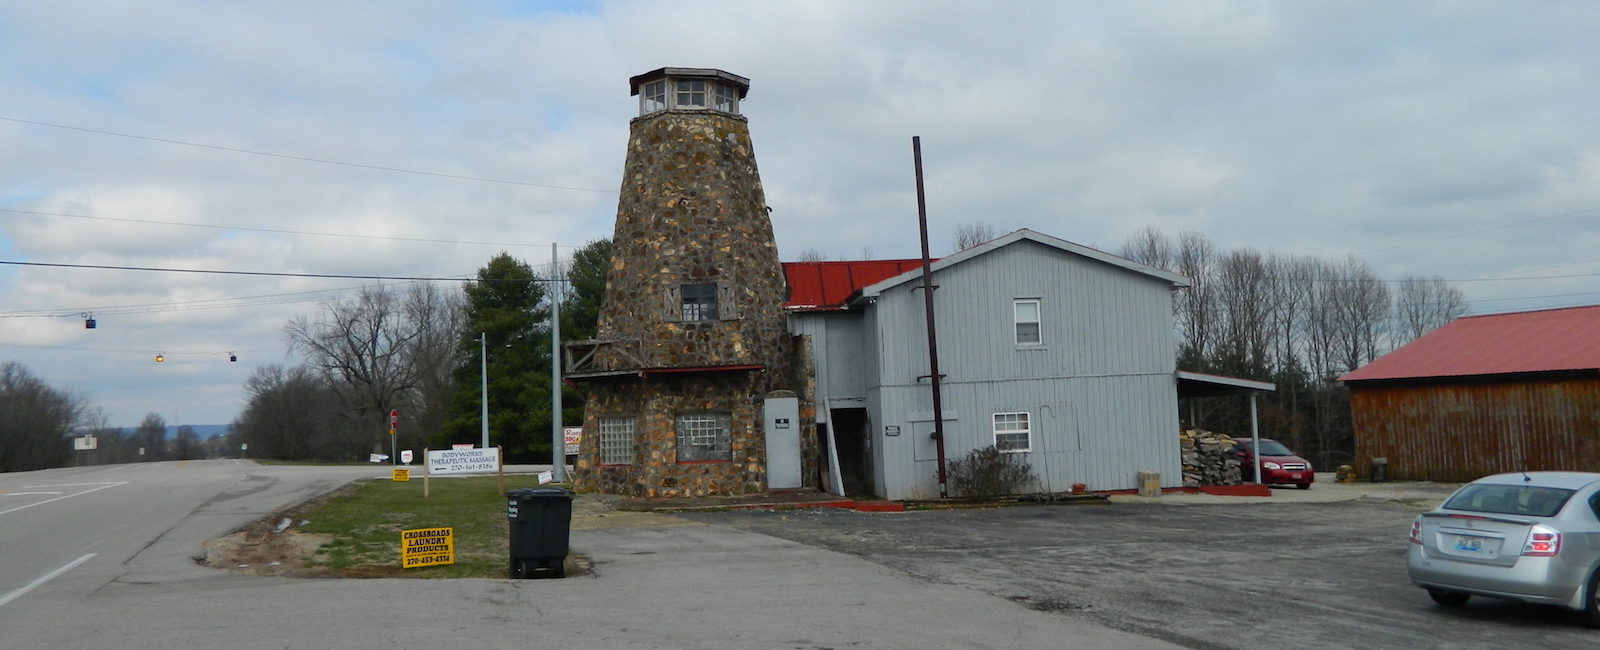 Windmill, abandoned restaurant